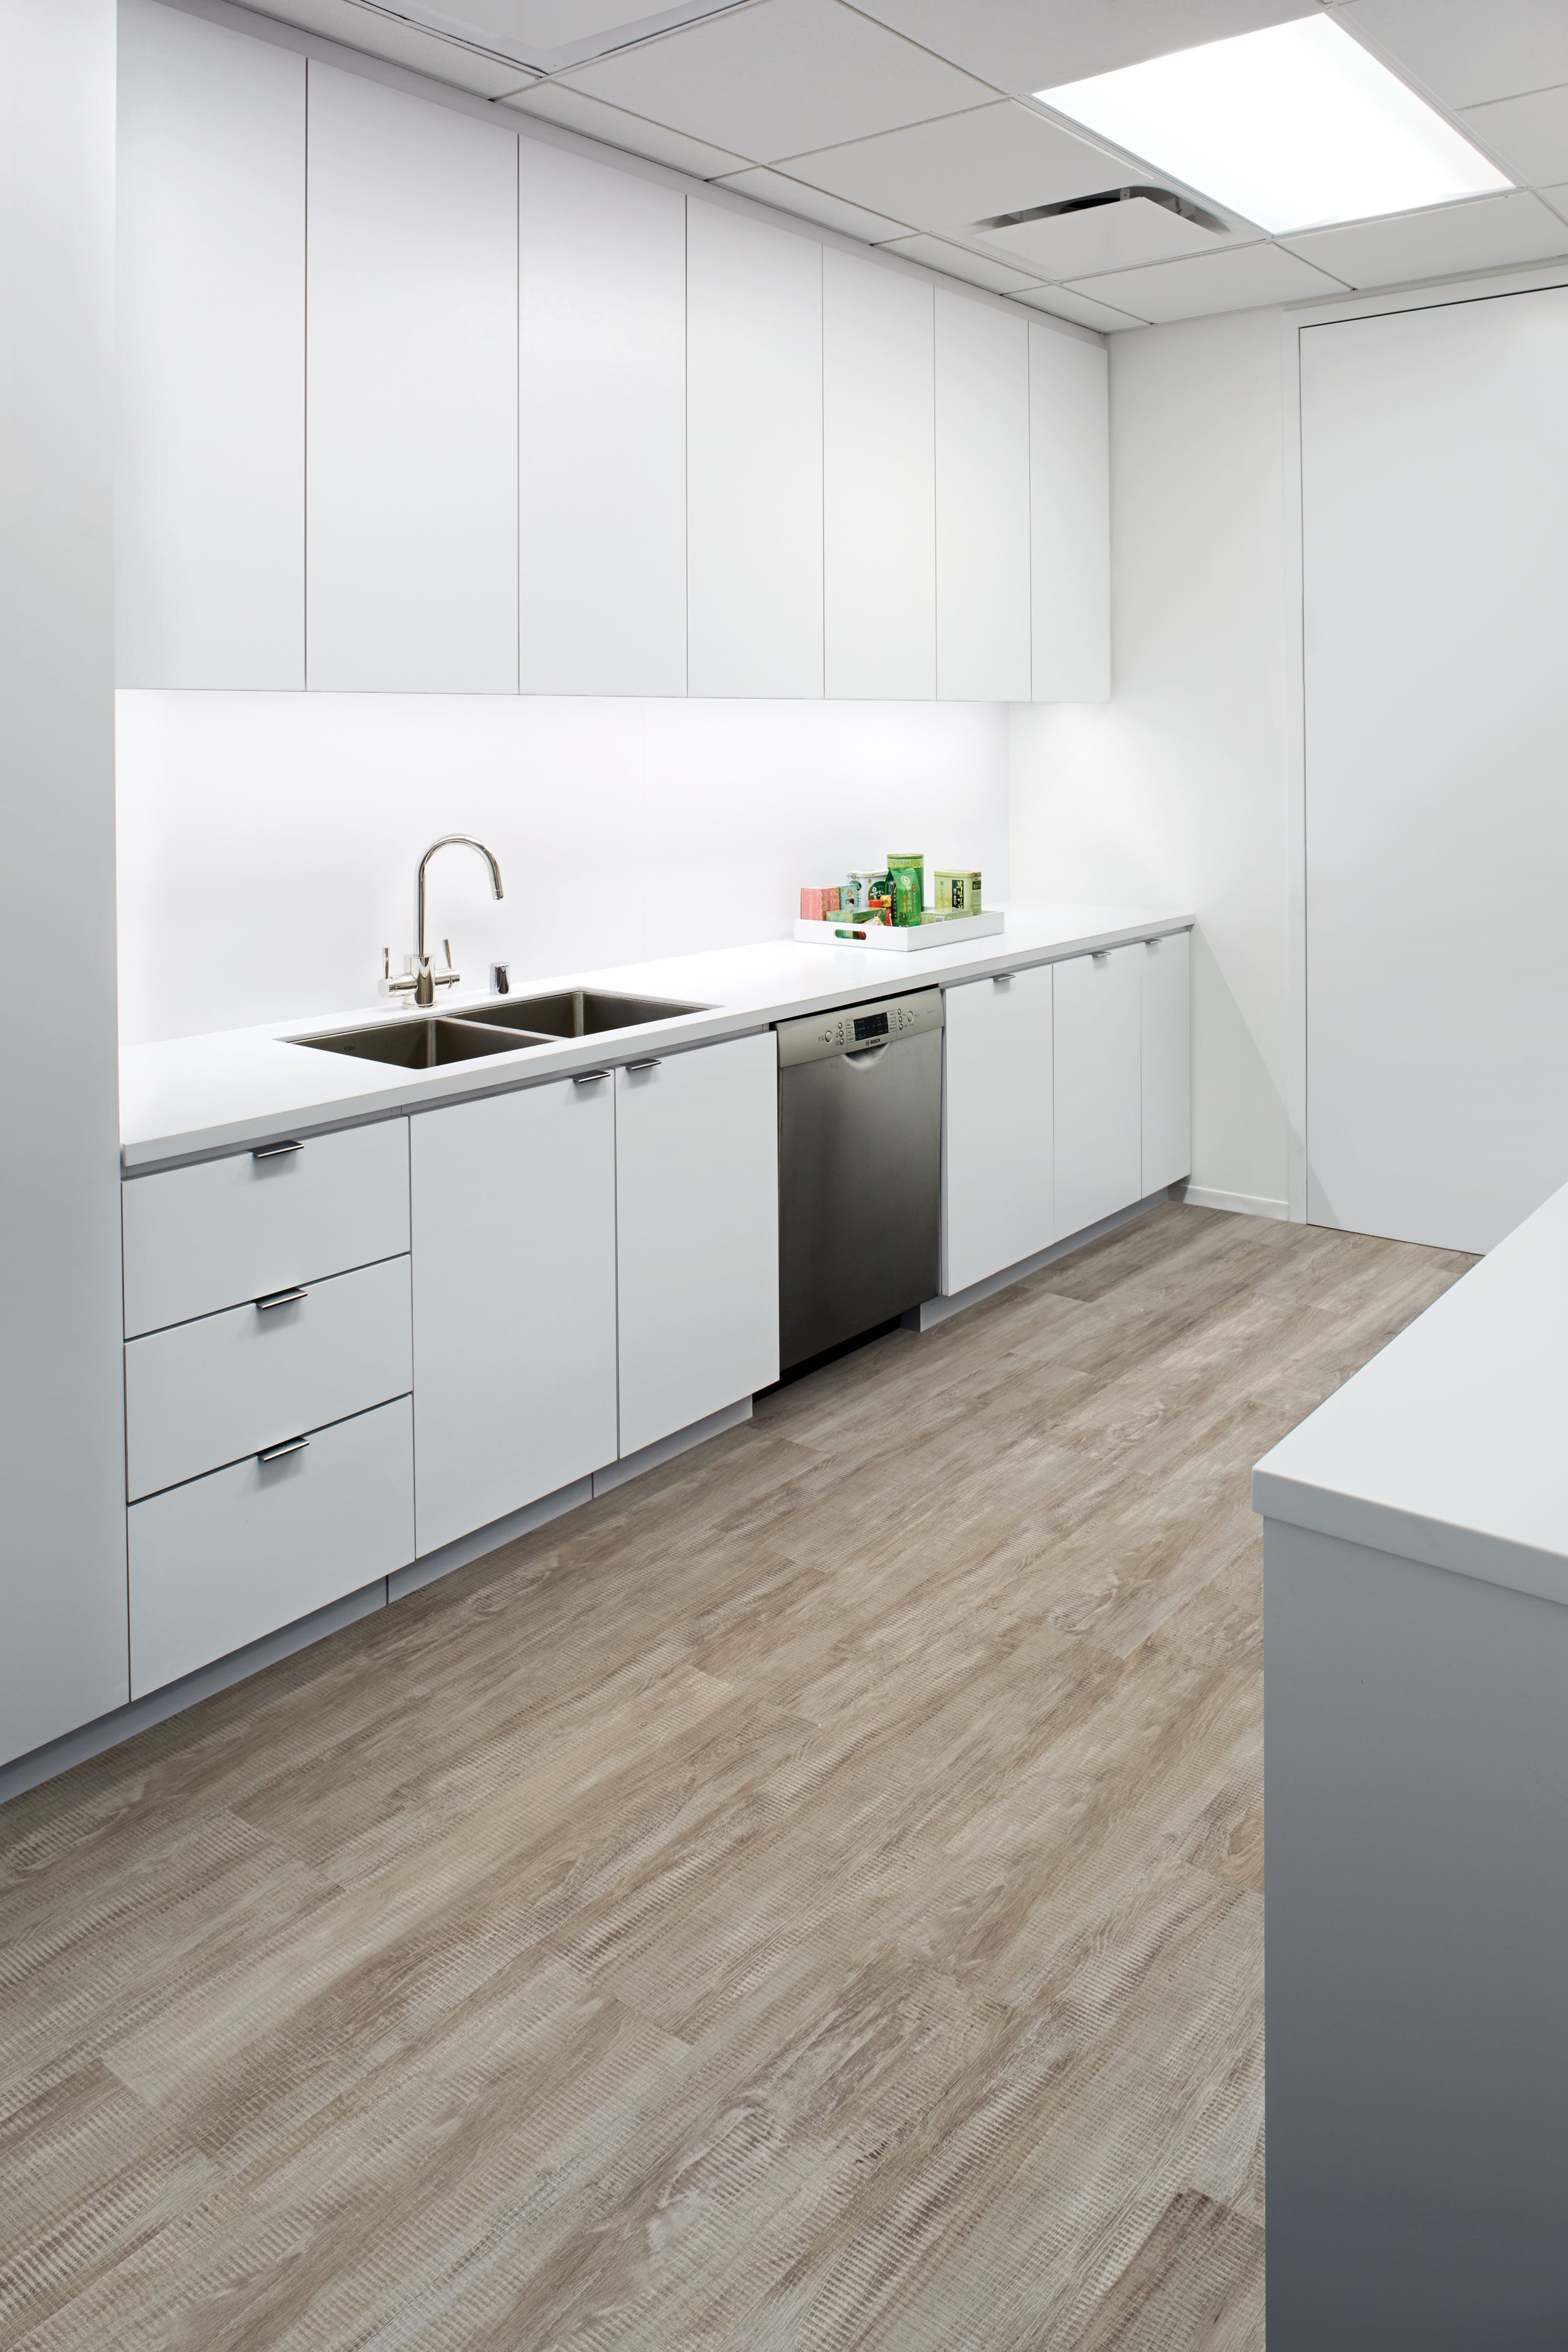 image Interface Textured Woodgrains LVT in kitchen area with sink numéro 8